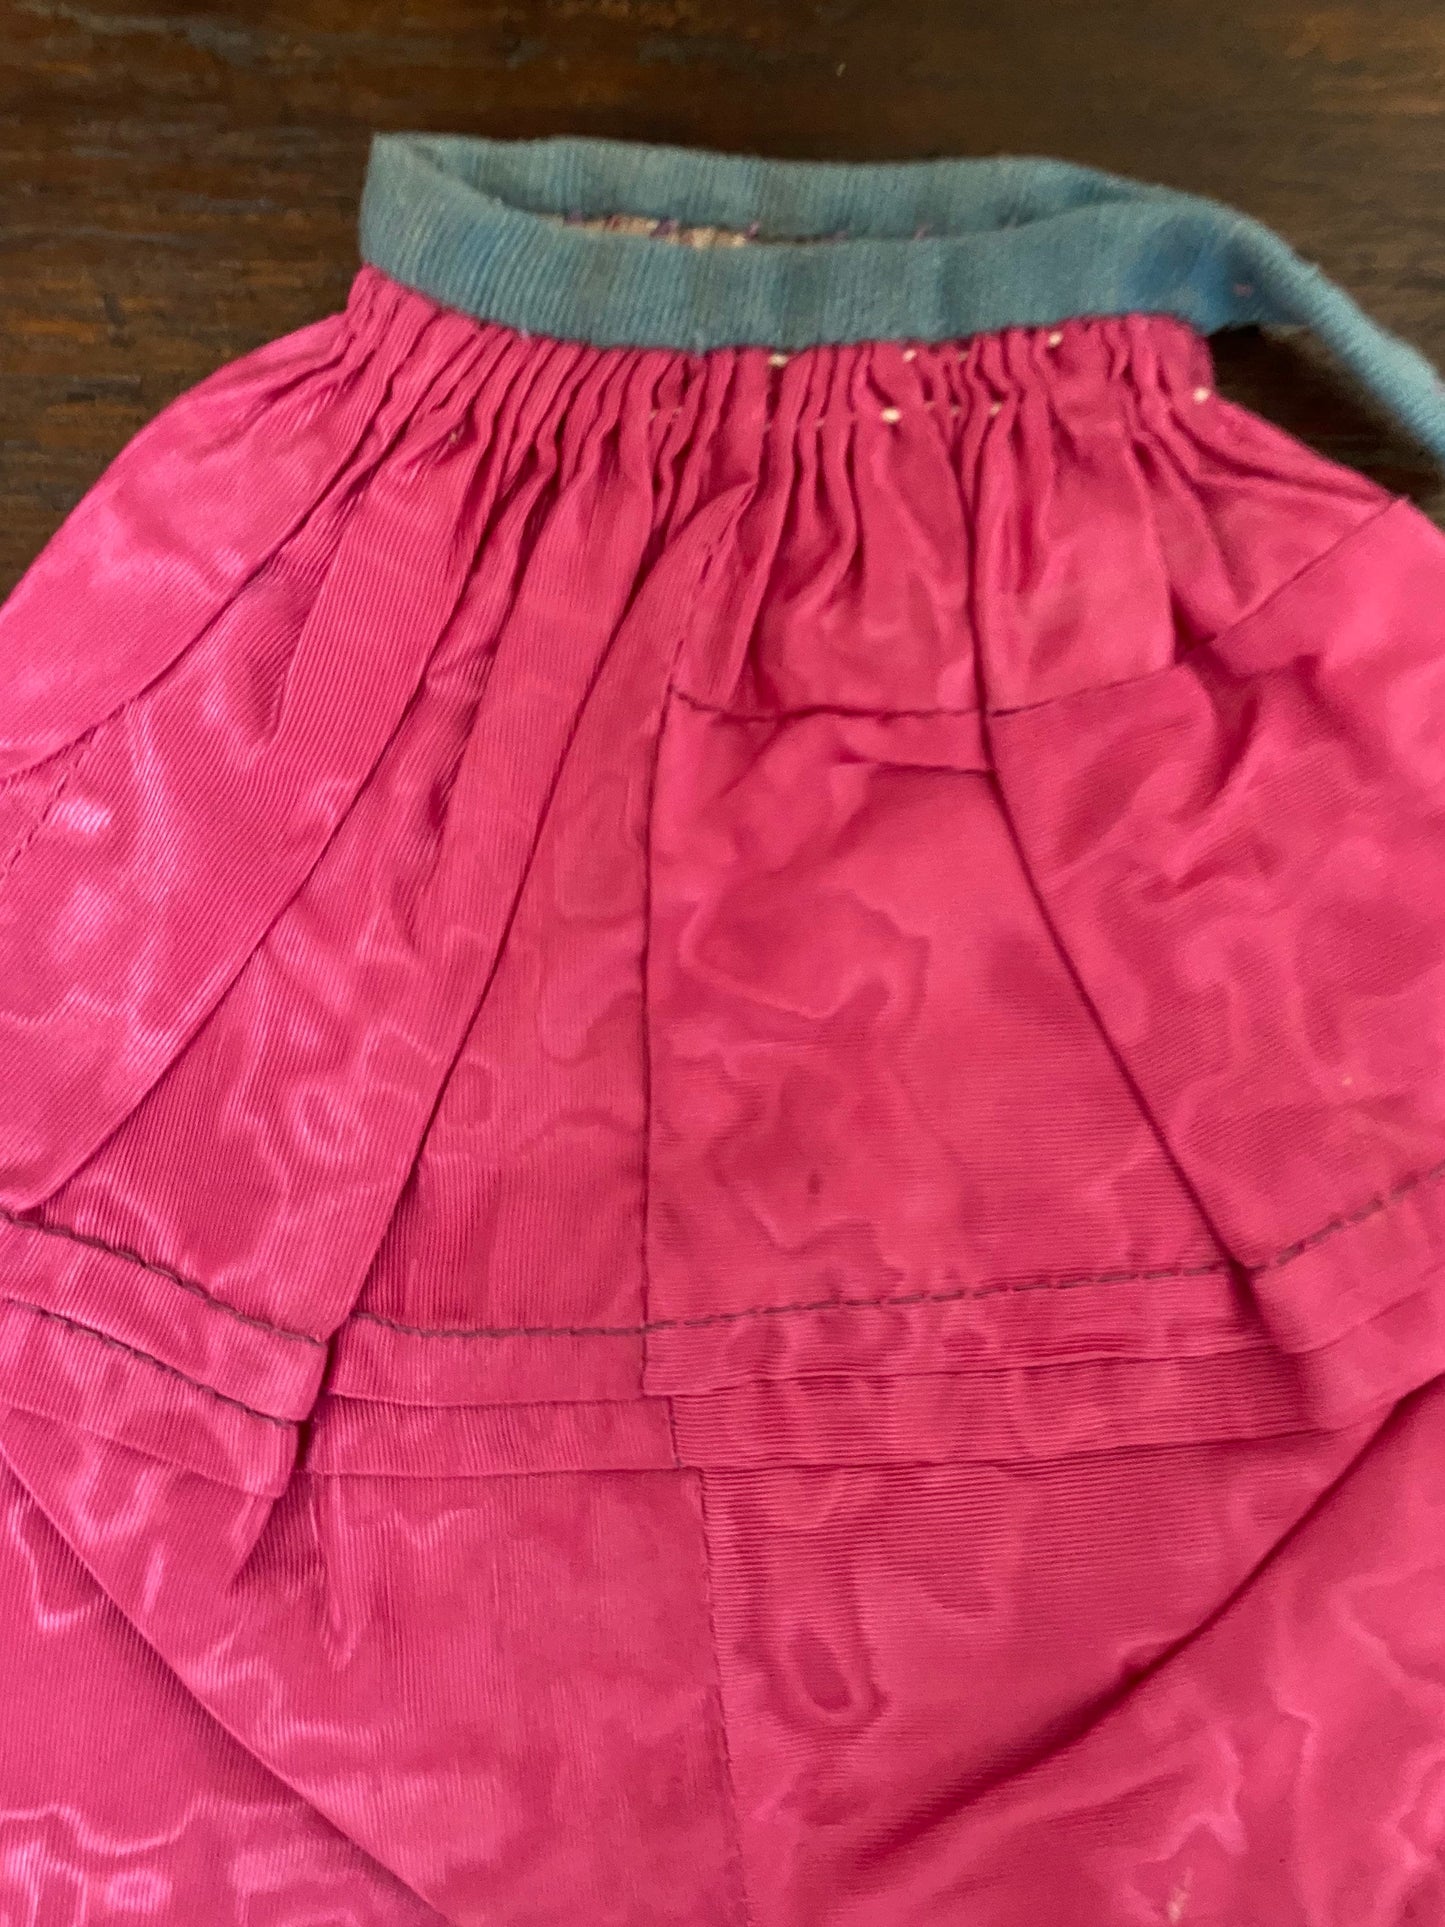 Vintage South American Saint Figurine Skirt Undergarment